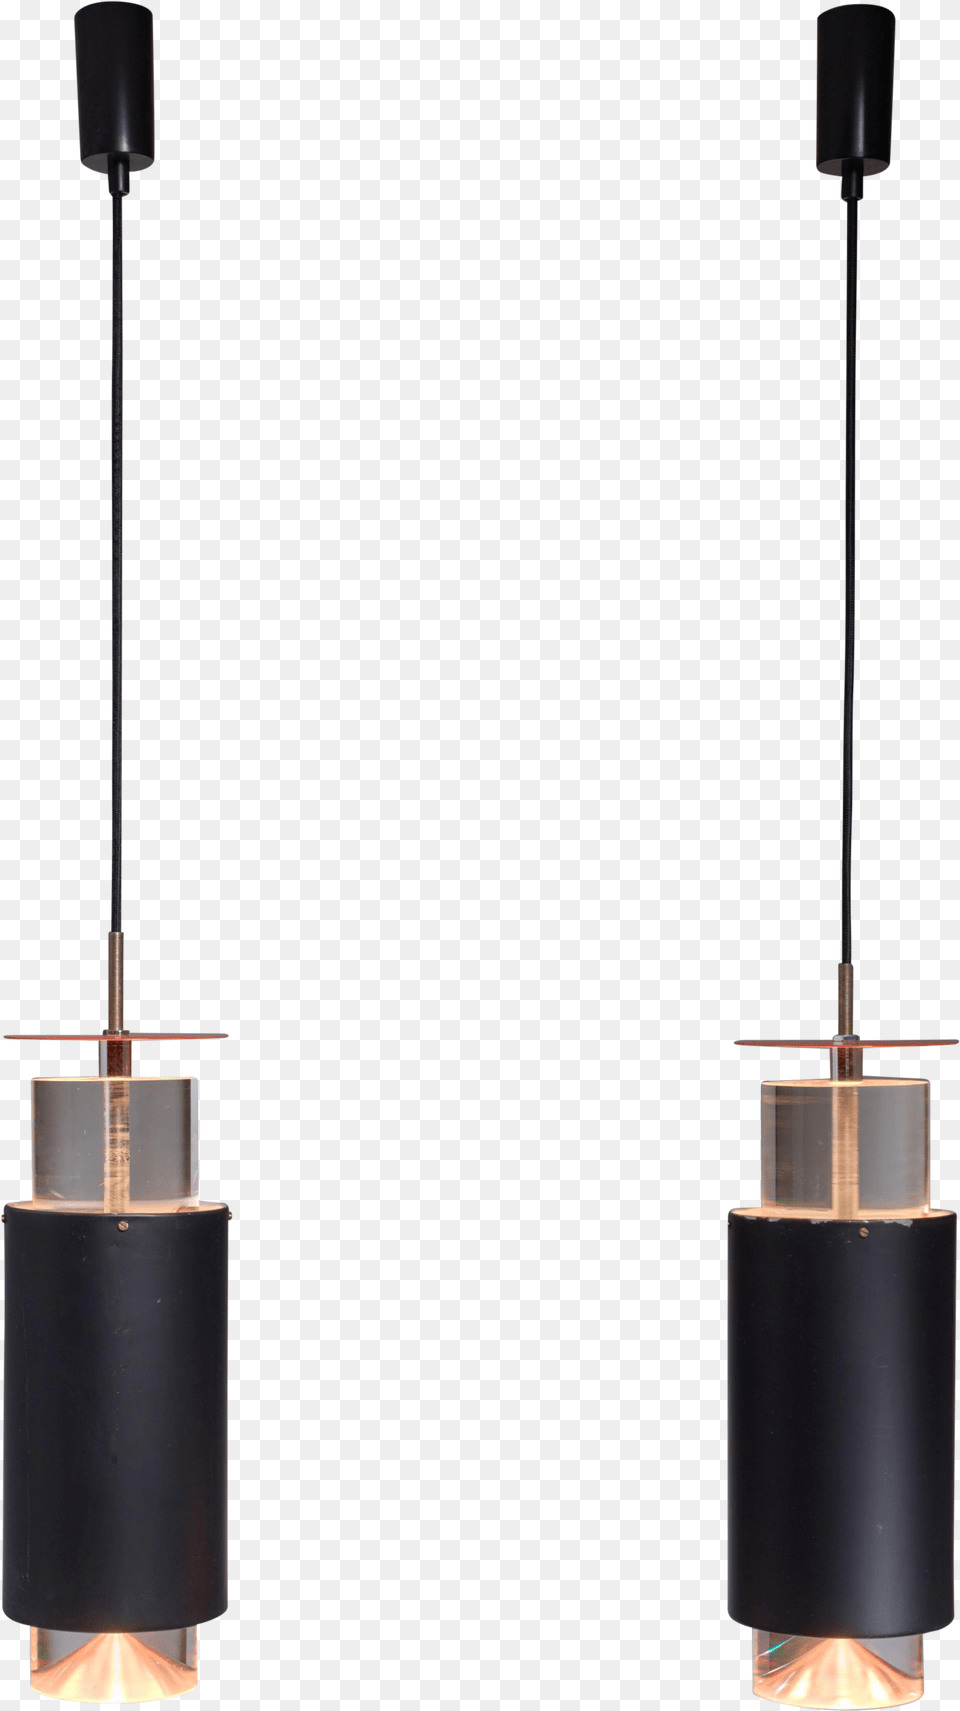 Lighting Design Denmark, Lamp, Chandelier Png Image